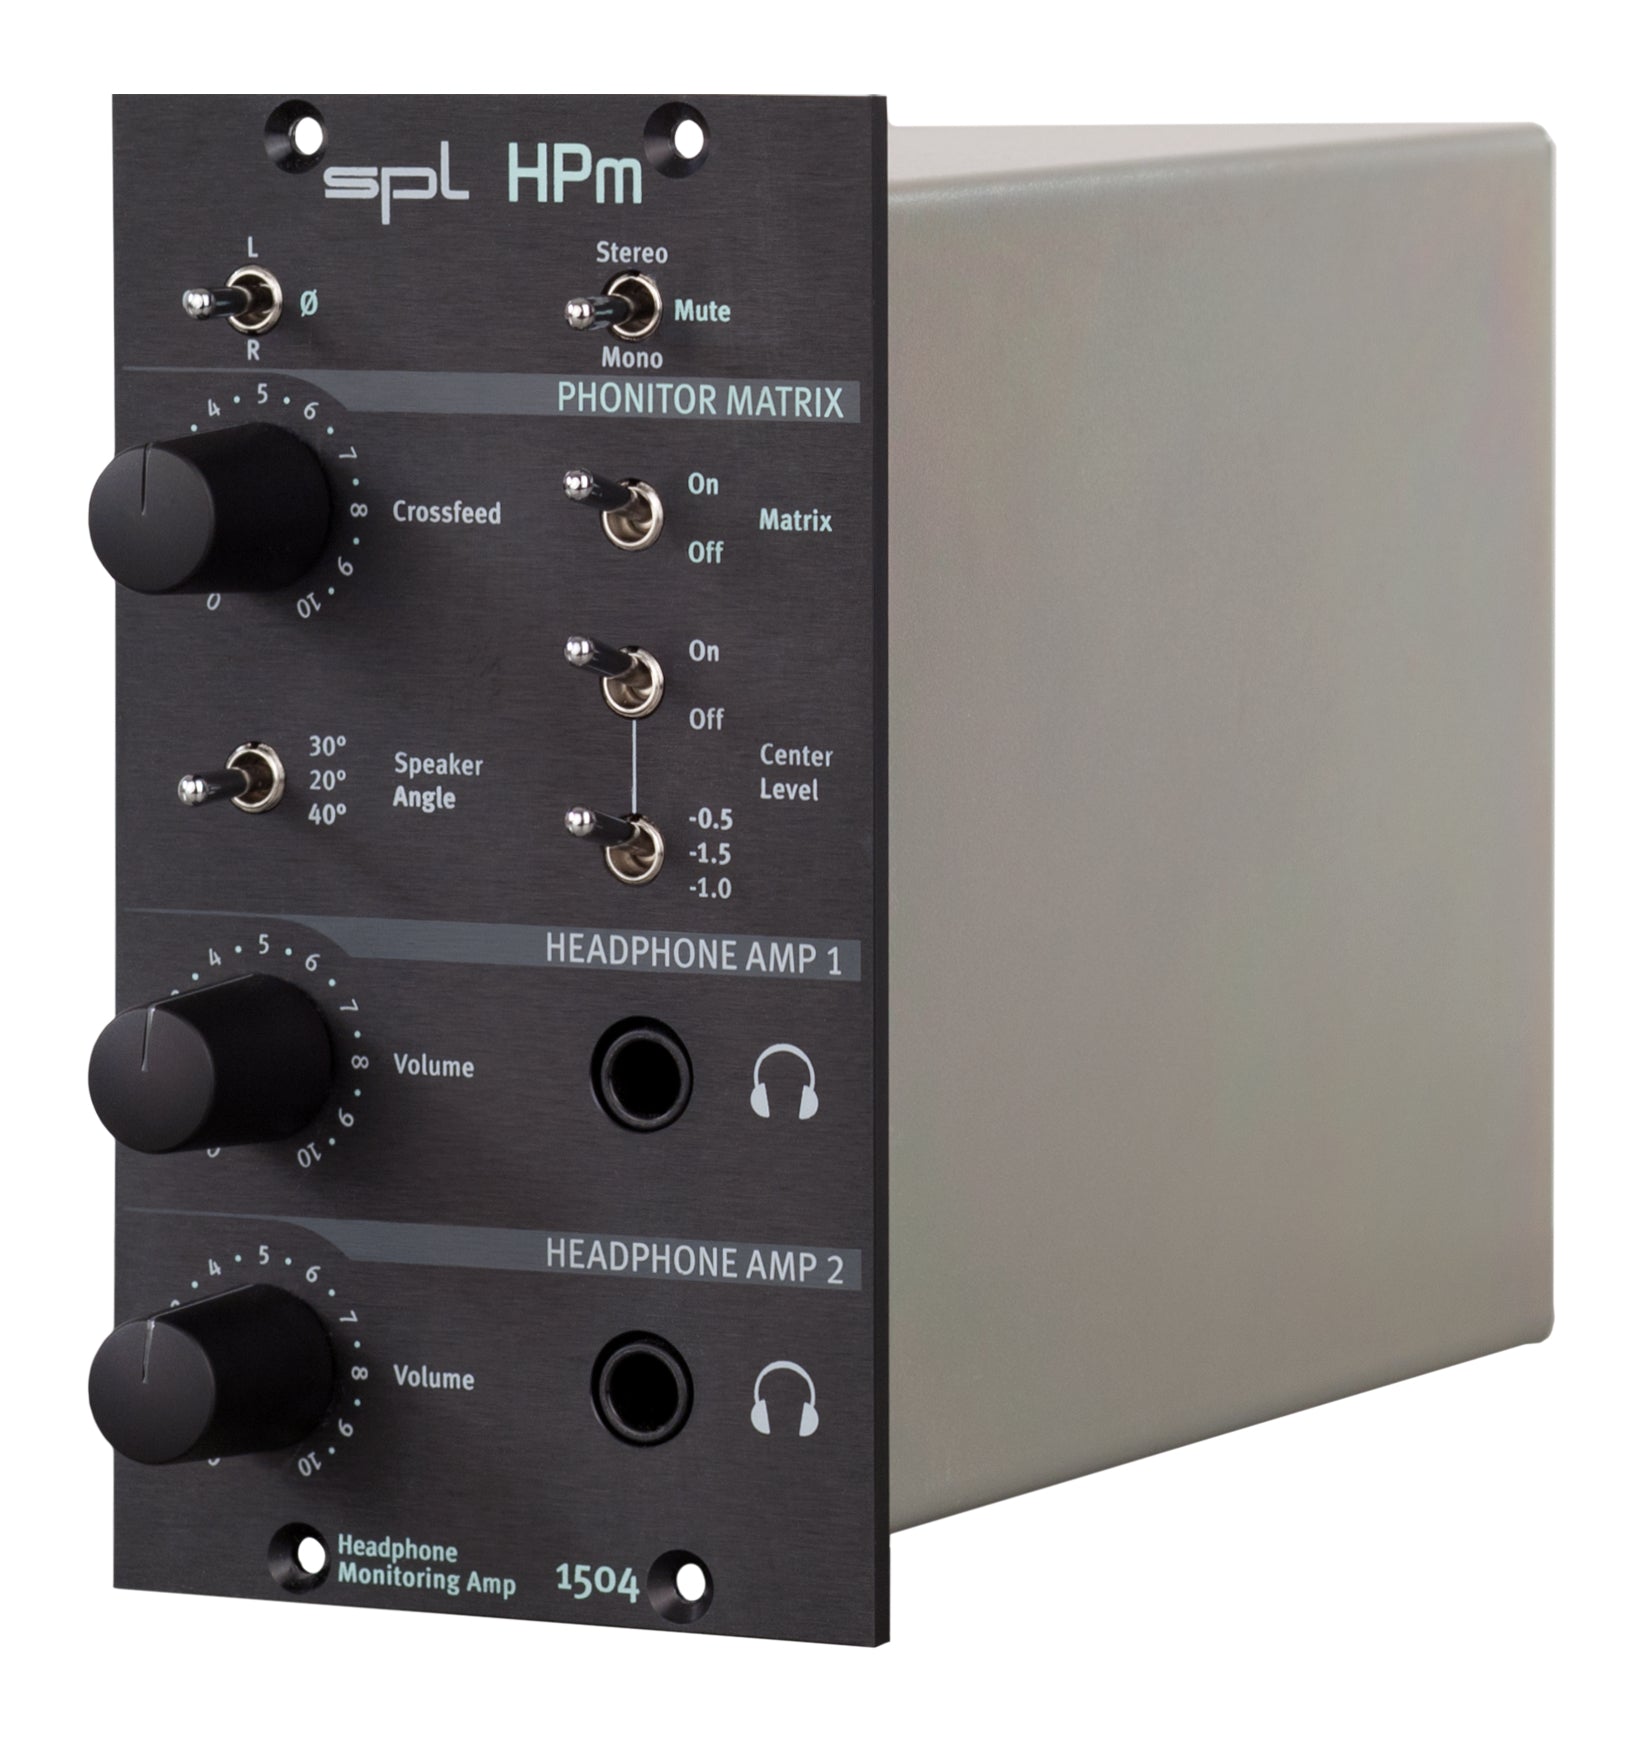 SPL HPm 500 Series